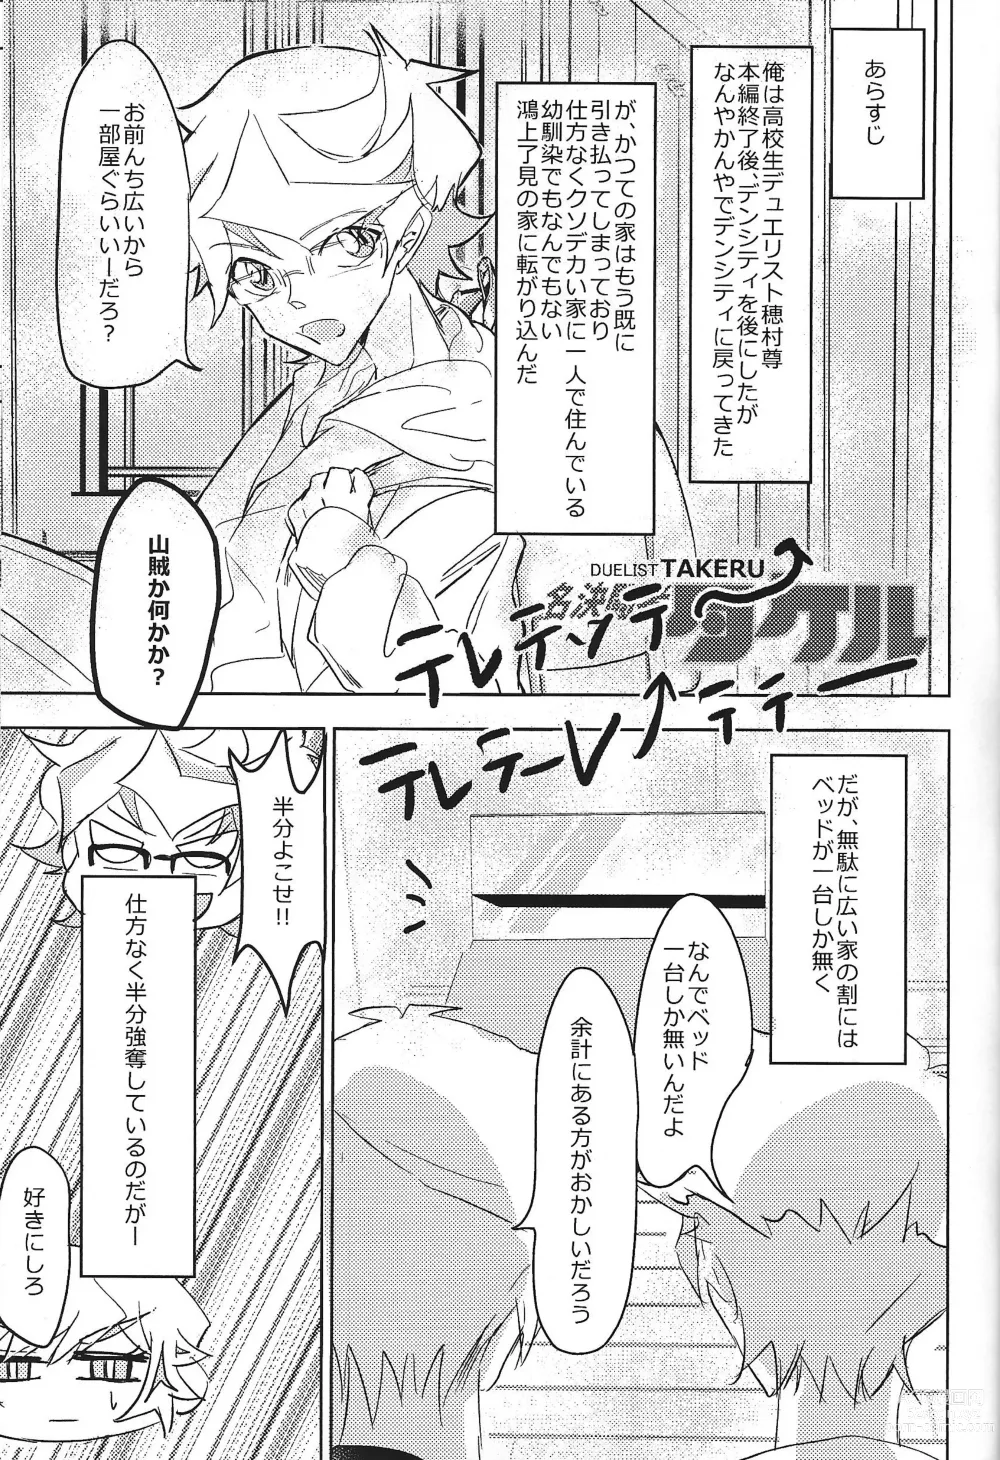 Page 4 of doujinshi Mikanseina